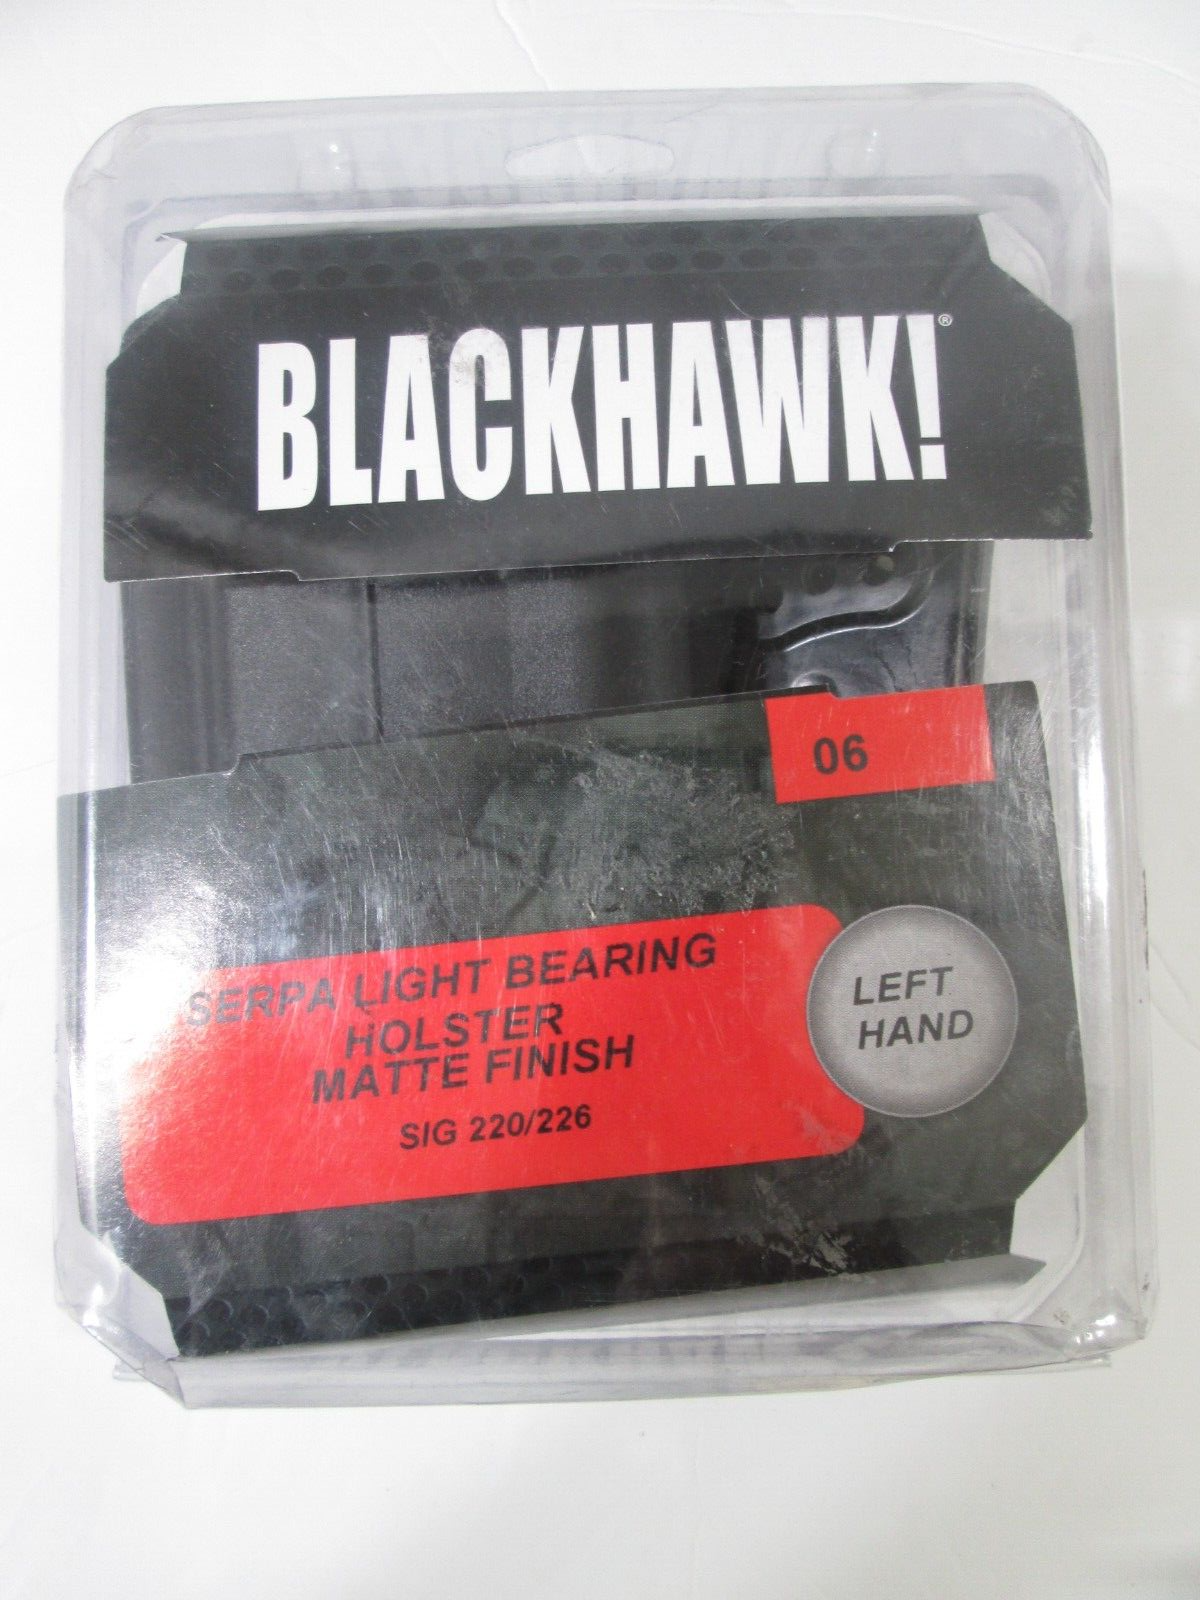 Primary image for Blackhawk Serpa Light Bearing Concealment Holster 220/226 Left Hand Matte Finish